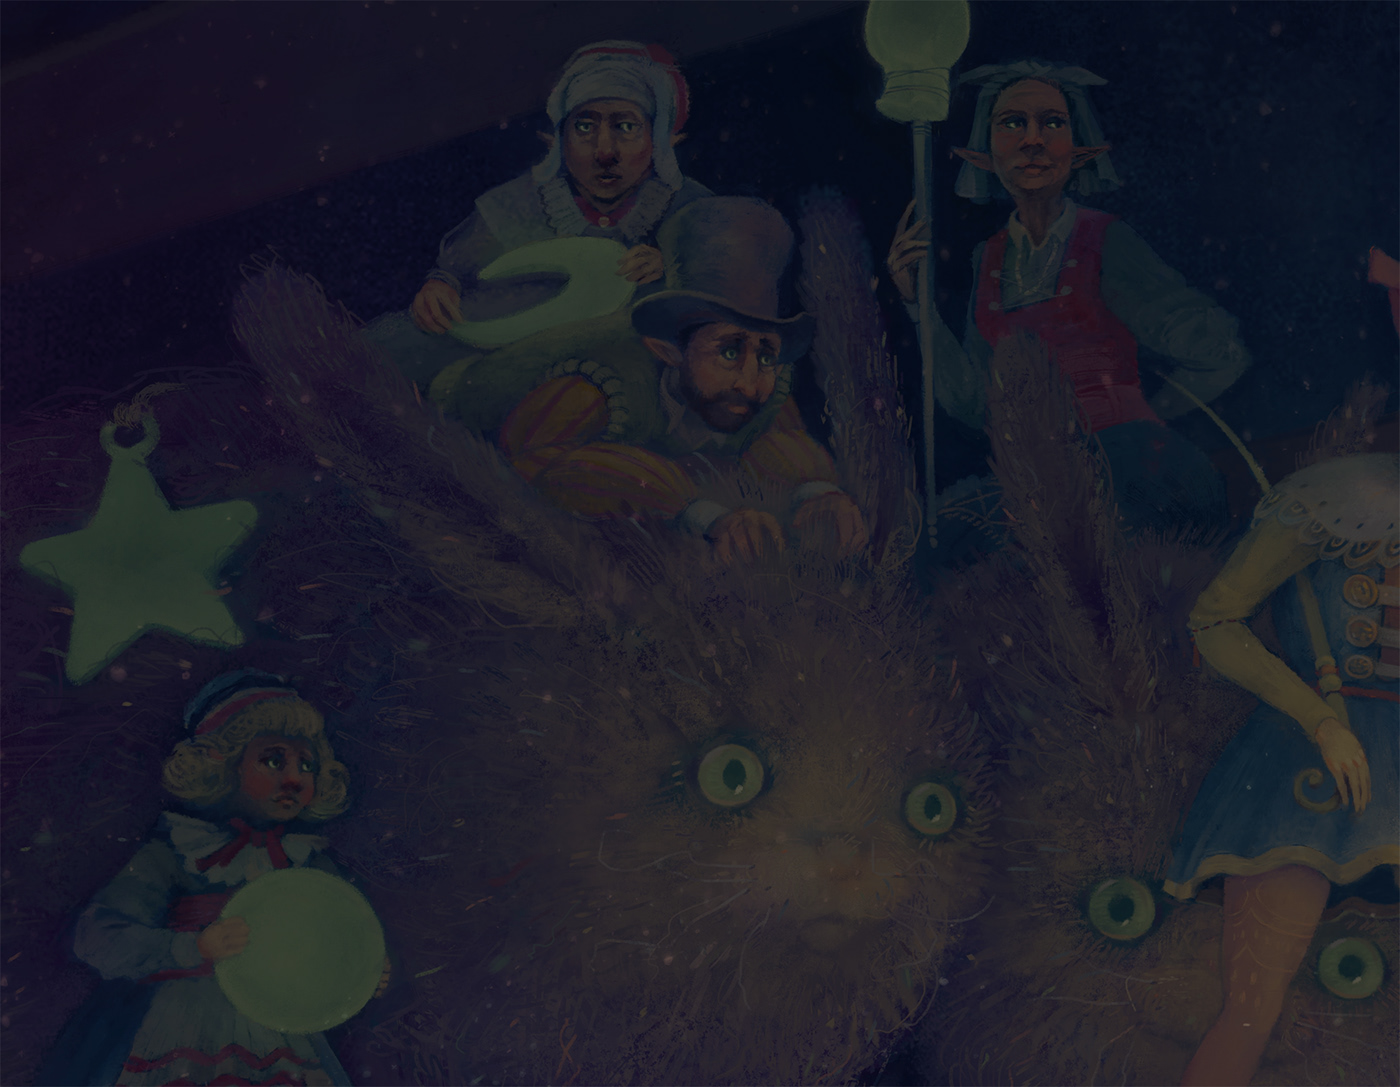 atomvoid bunny elf fantasy small fairytale childrensbook